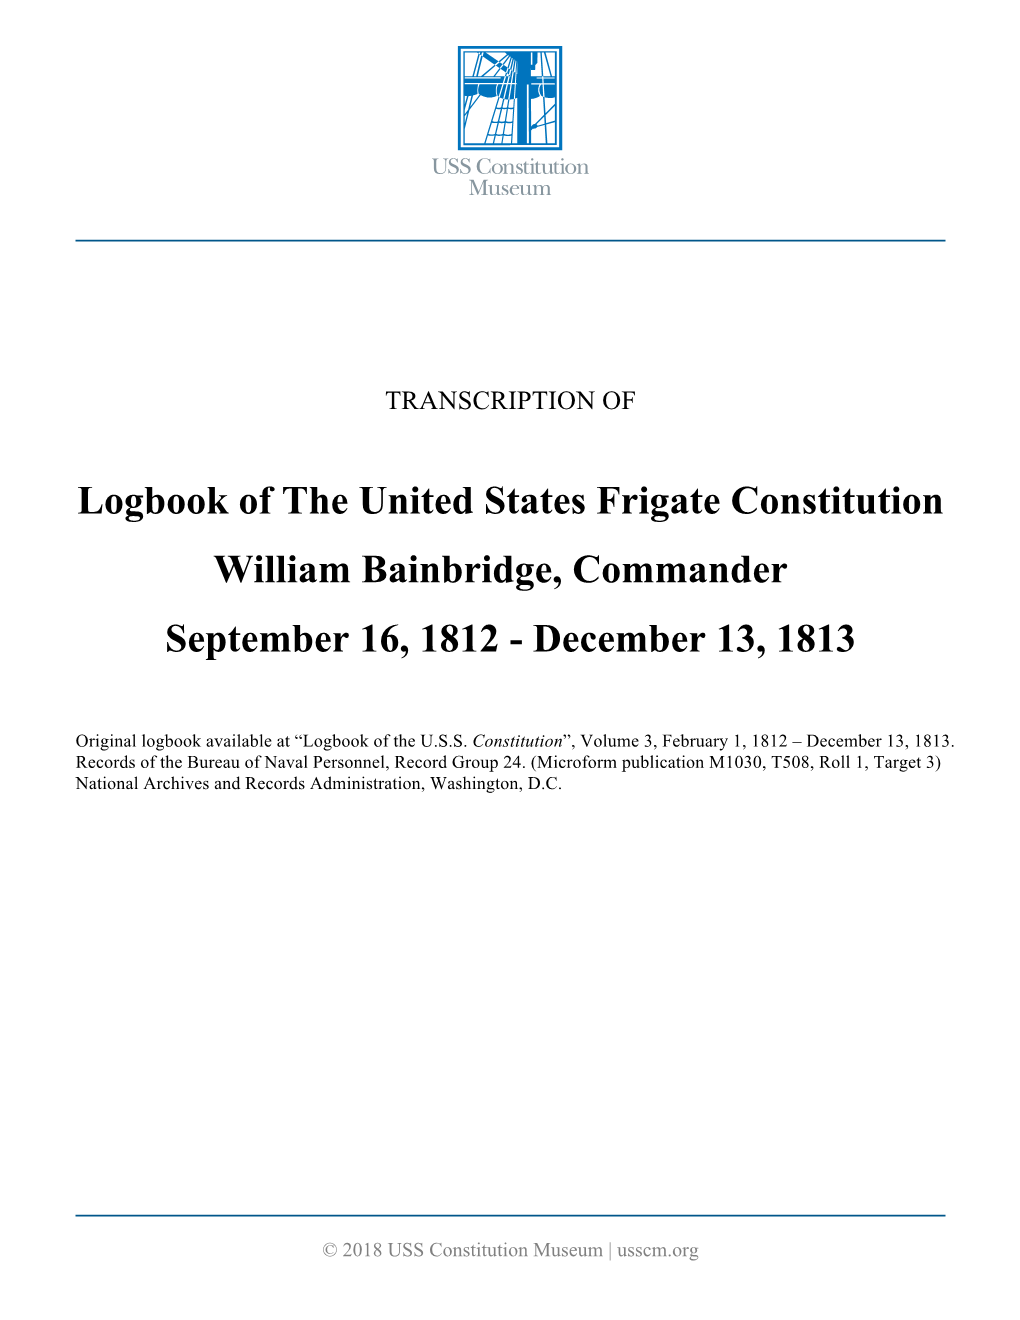 Logbook of the United States Frigate Constitution William Bainbridge, Commander September 16, 1812 - December 13, 1813